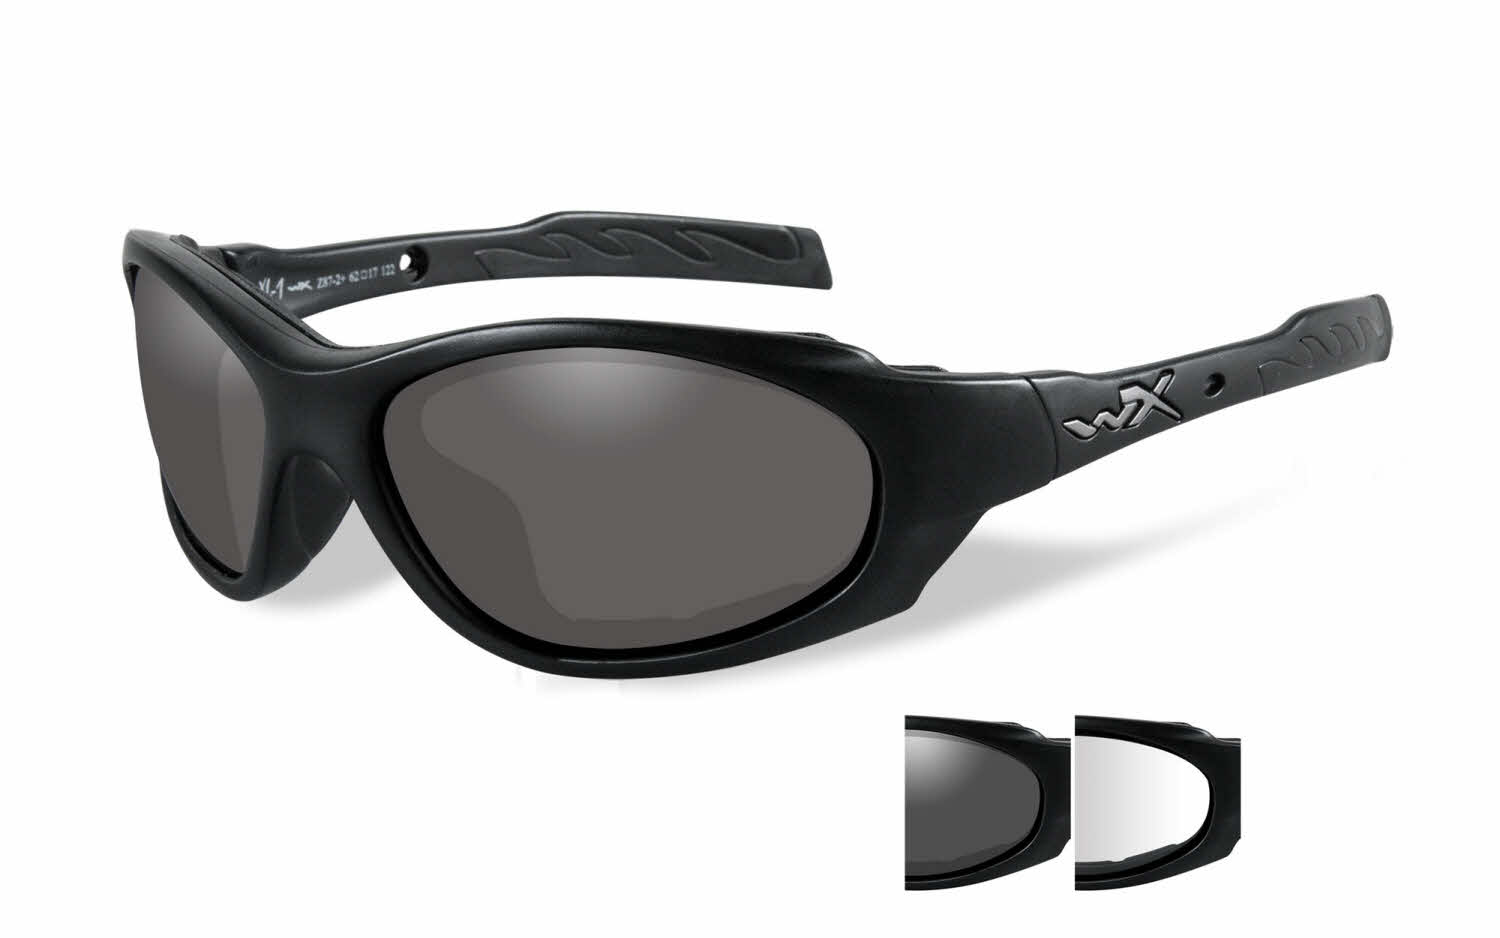 XL-1 Advanced Sunglasses